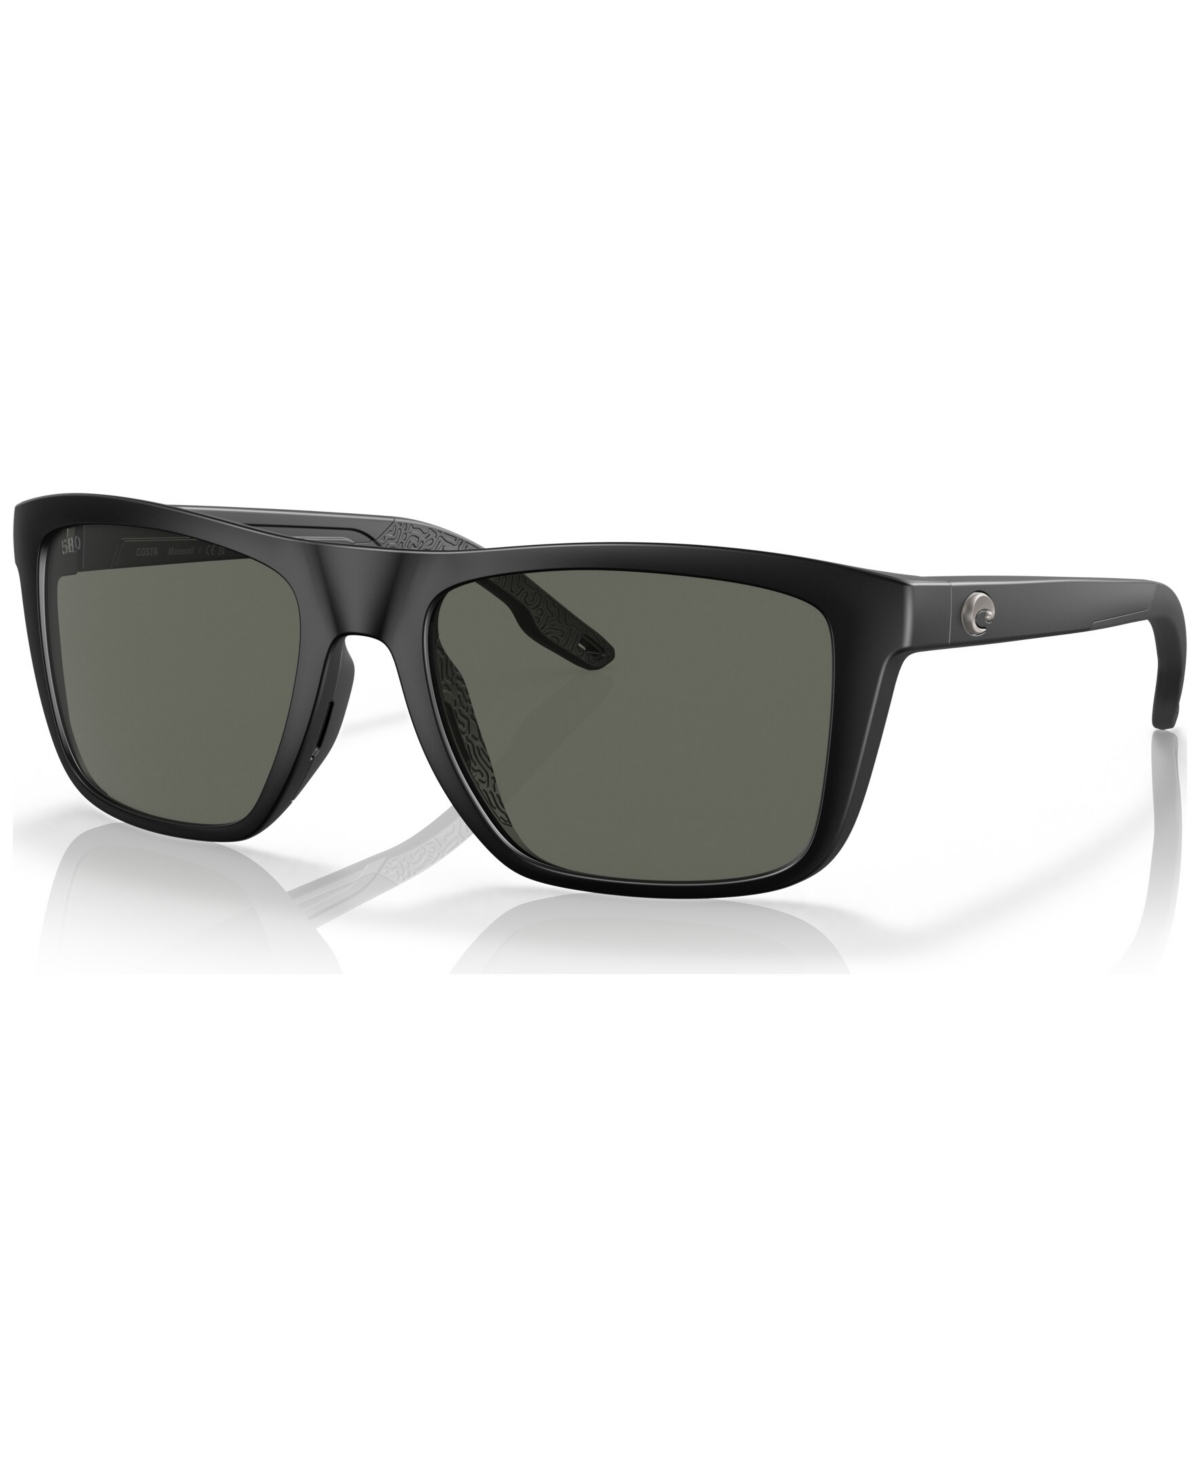 Men's Mainsail Polarized Sunglasses, 6S910755-p 55 - Matte Black